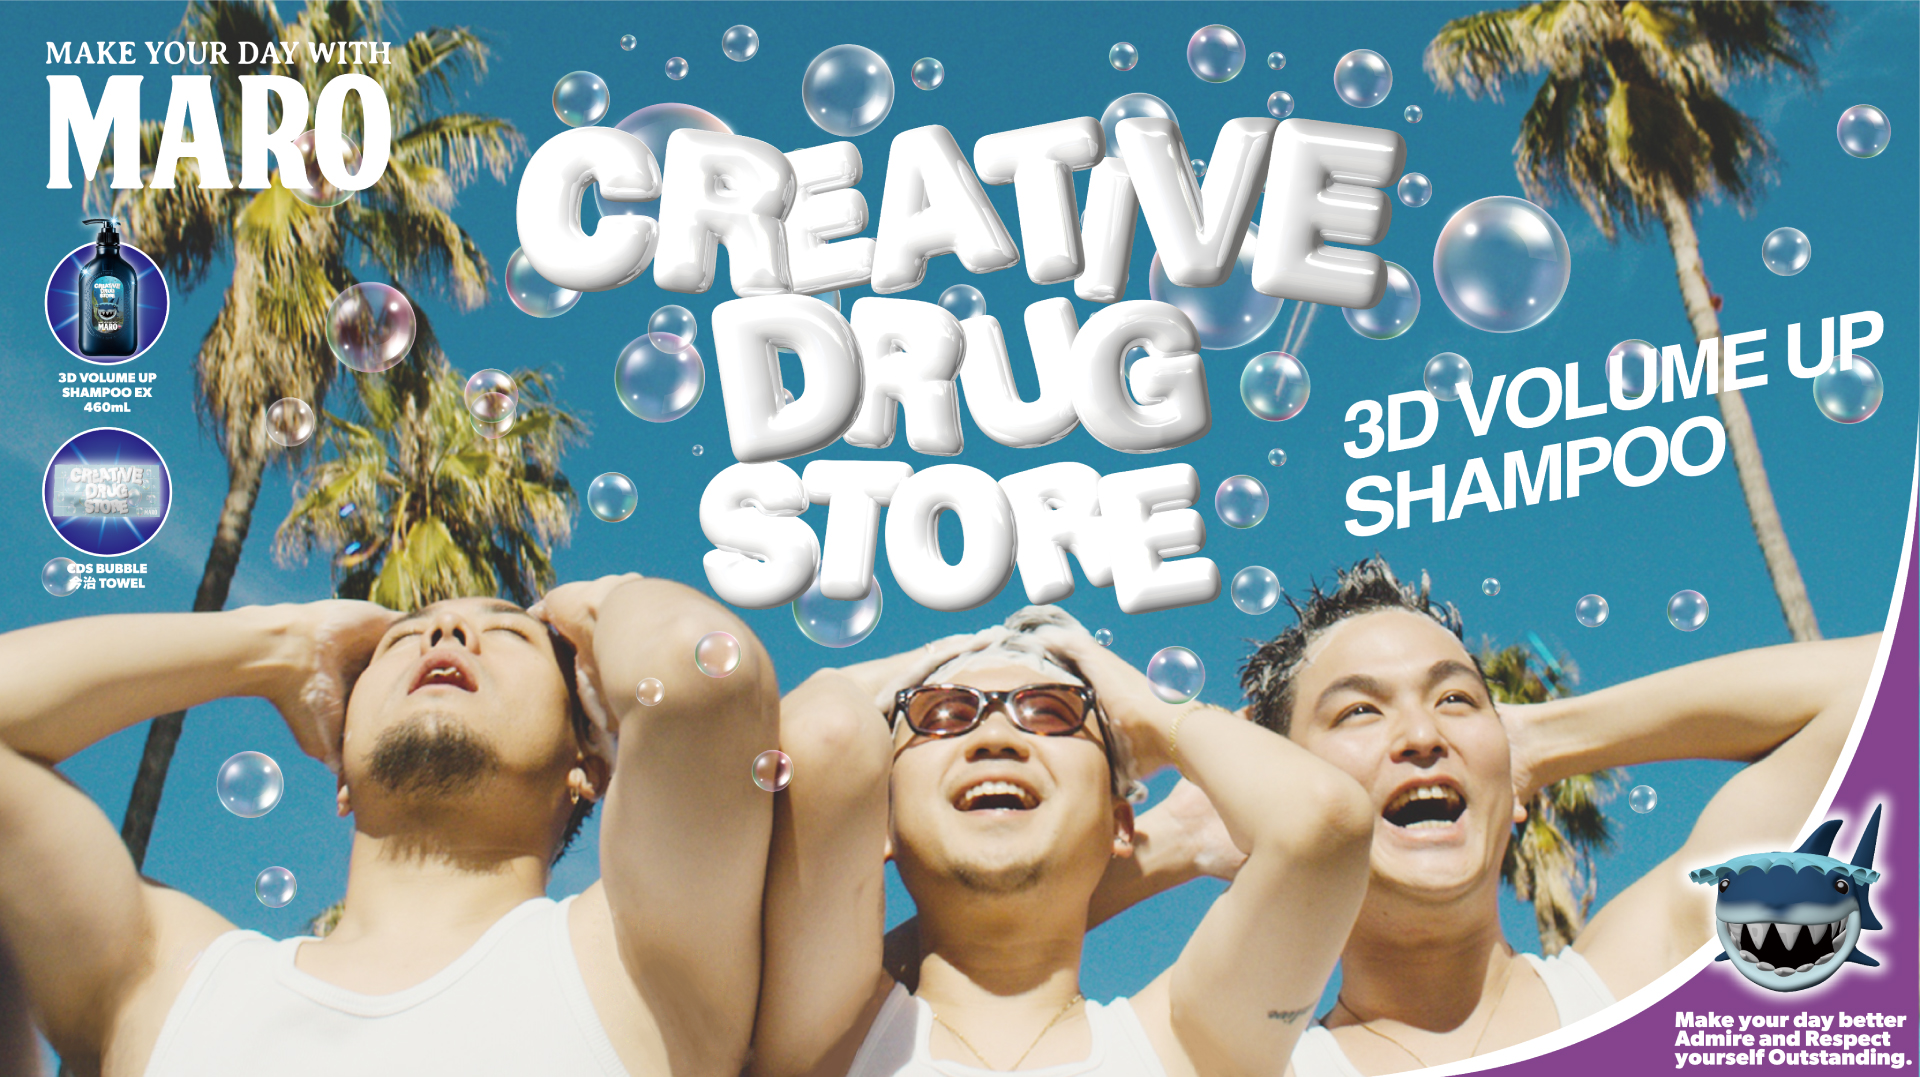 MARO/CREATIVE DRUG STORE